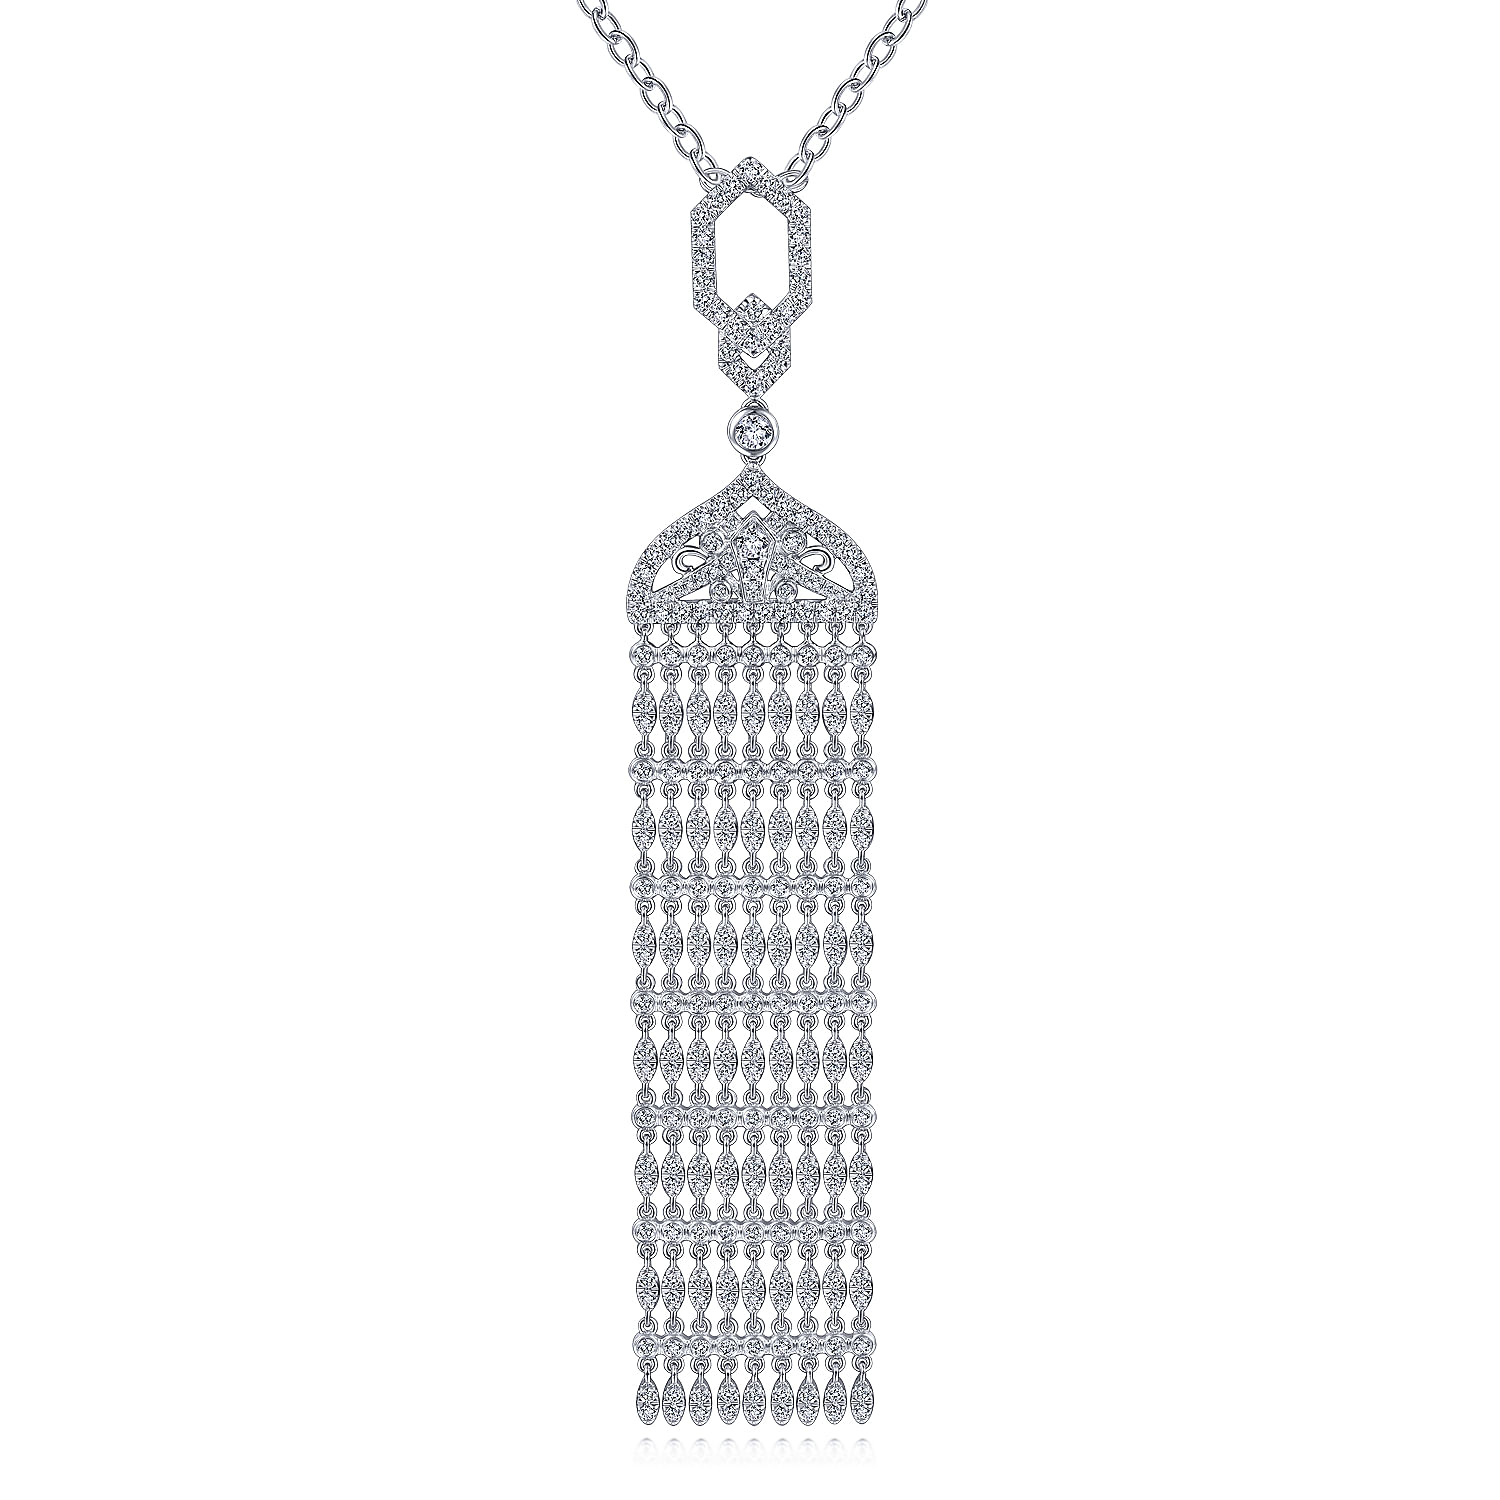 30 inch Vintage Inspired 18K White Gold Filigree and Diamond Tassel Pendant Necklace